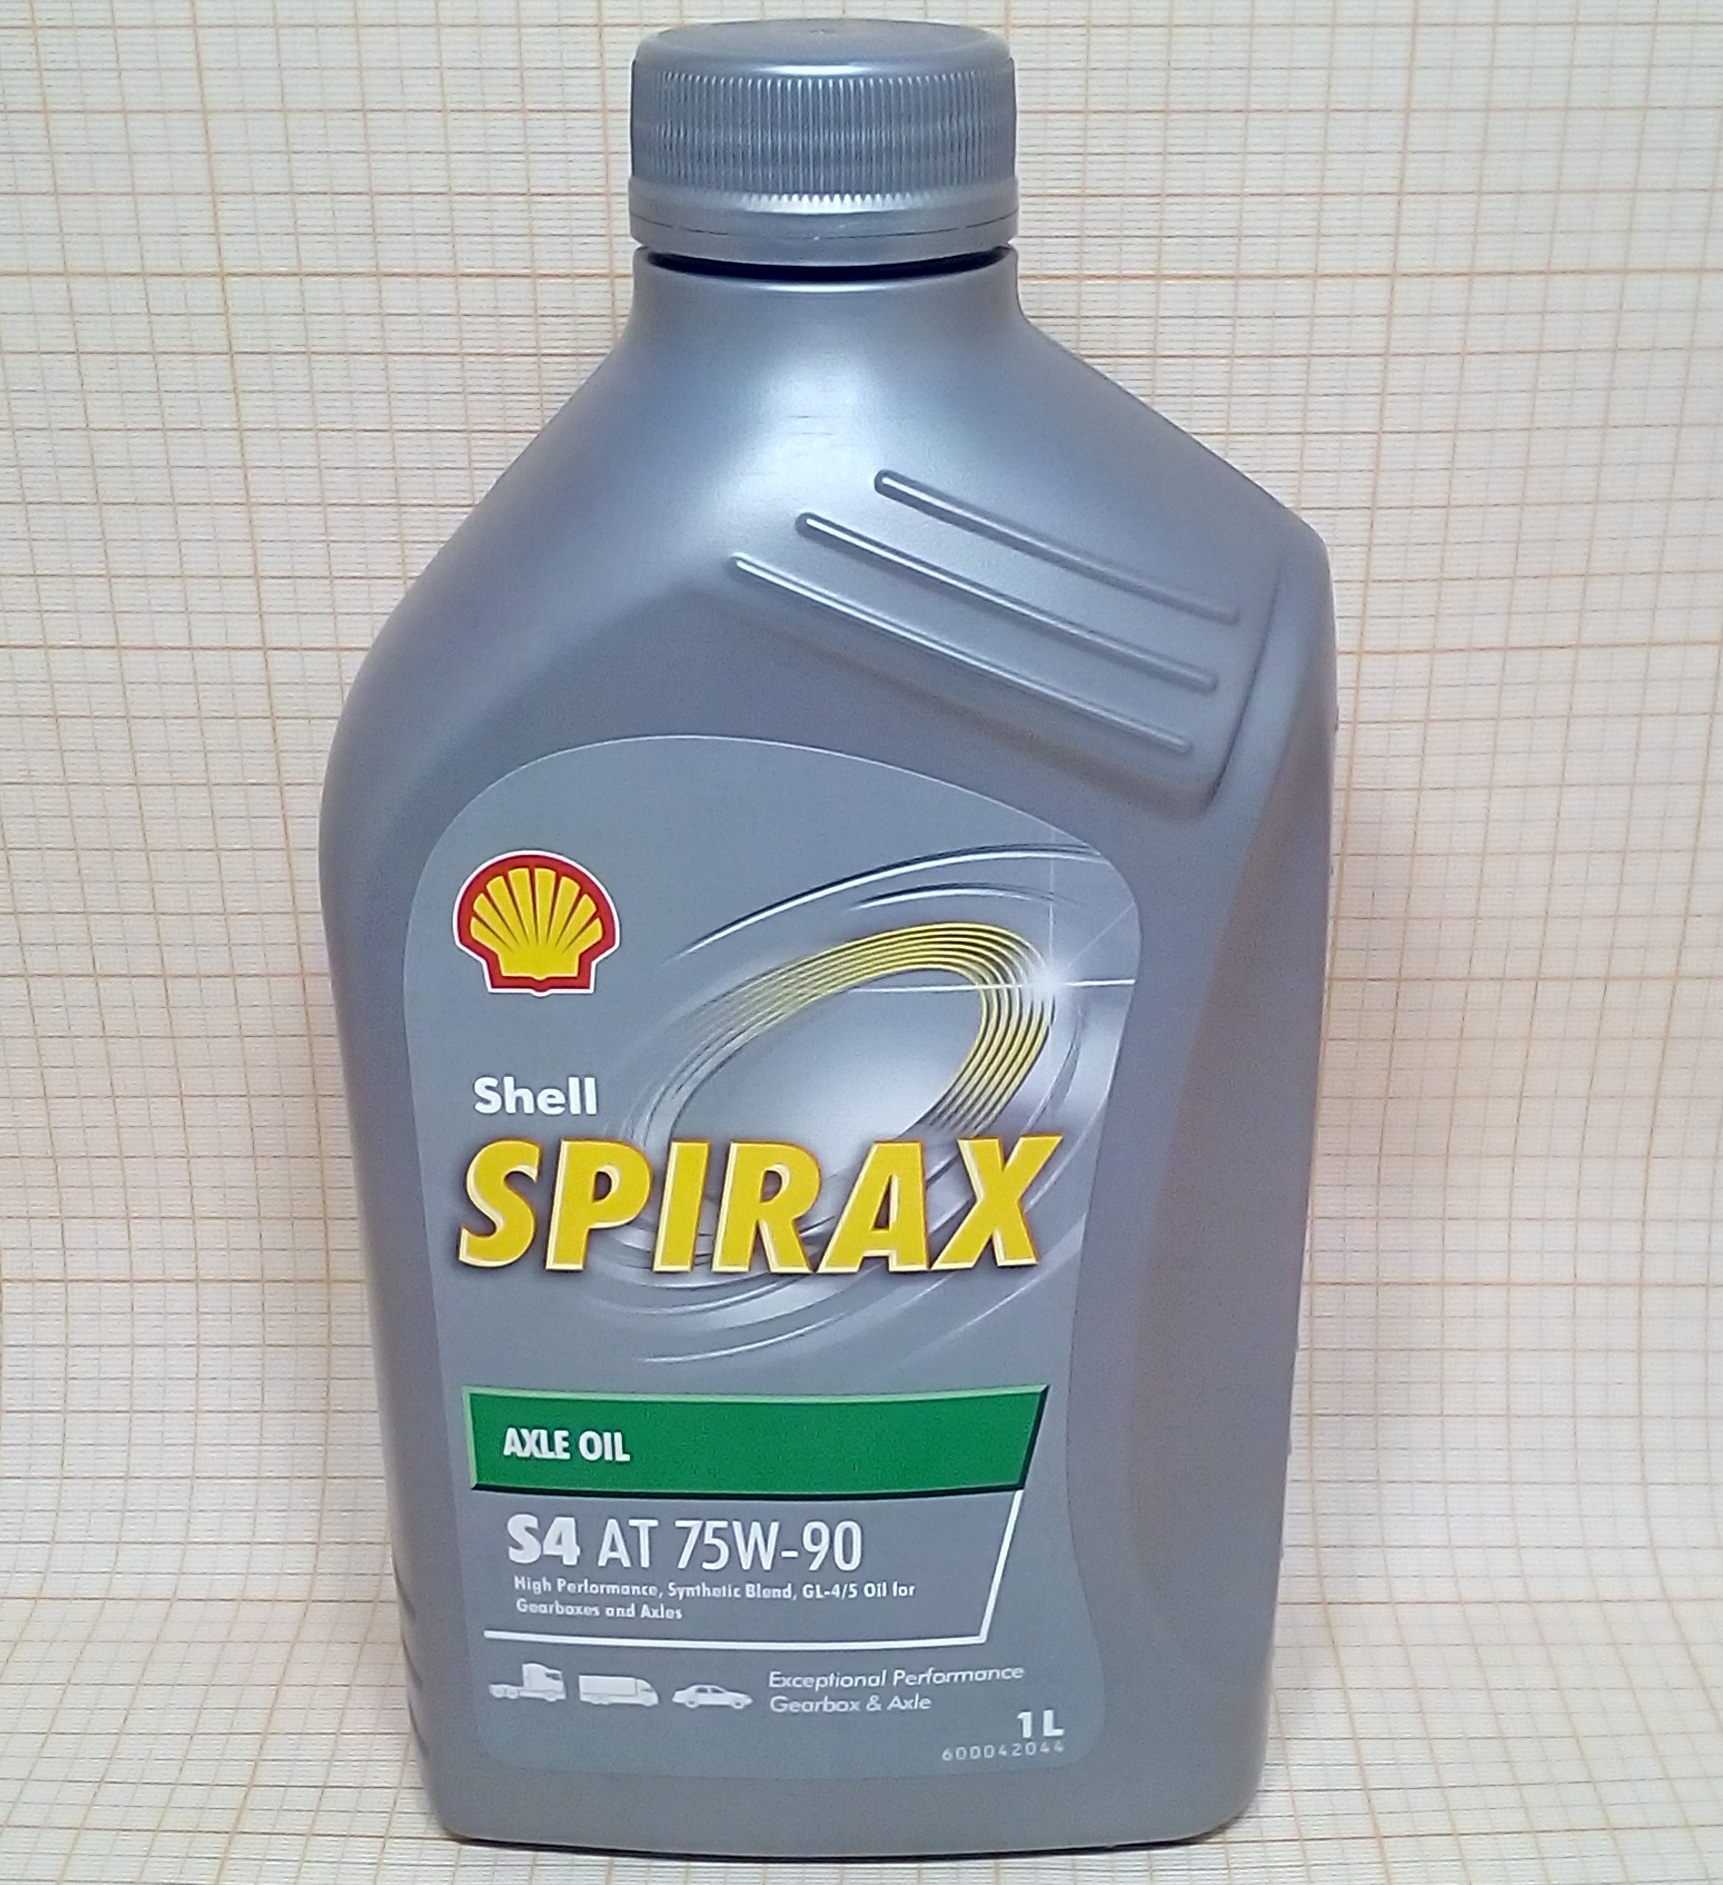 Гл 5 масло. Масло трансмиссионное Shell Spirax s4 g75w-90 gl-4. Shell Spirax s4 at 75w-90. Shell Spirax s4 at 75w90 1л. Трансмиссионное масло Shell Spirax s4 at 75w-90.